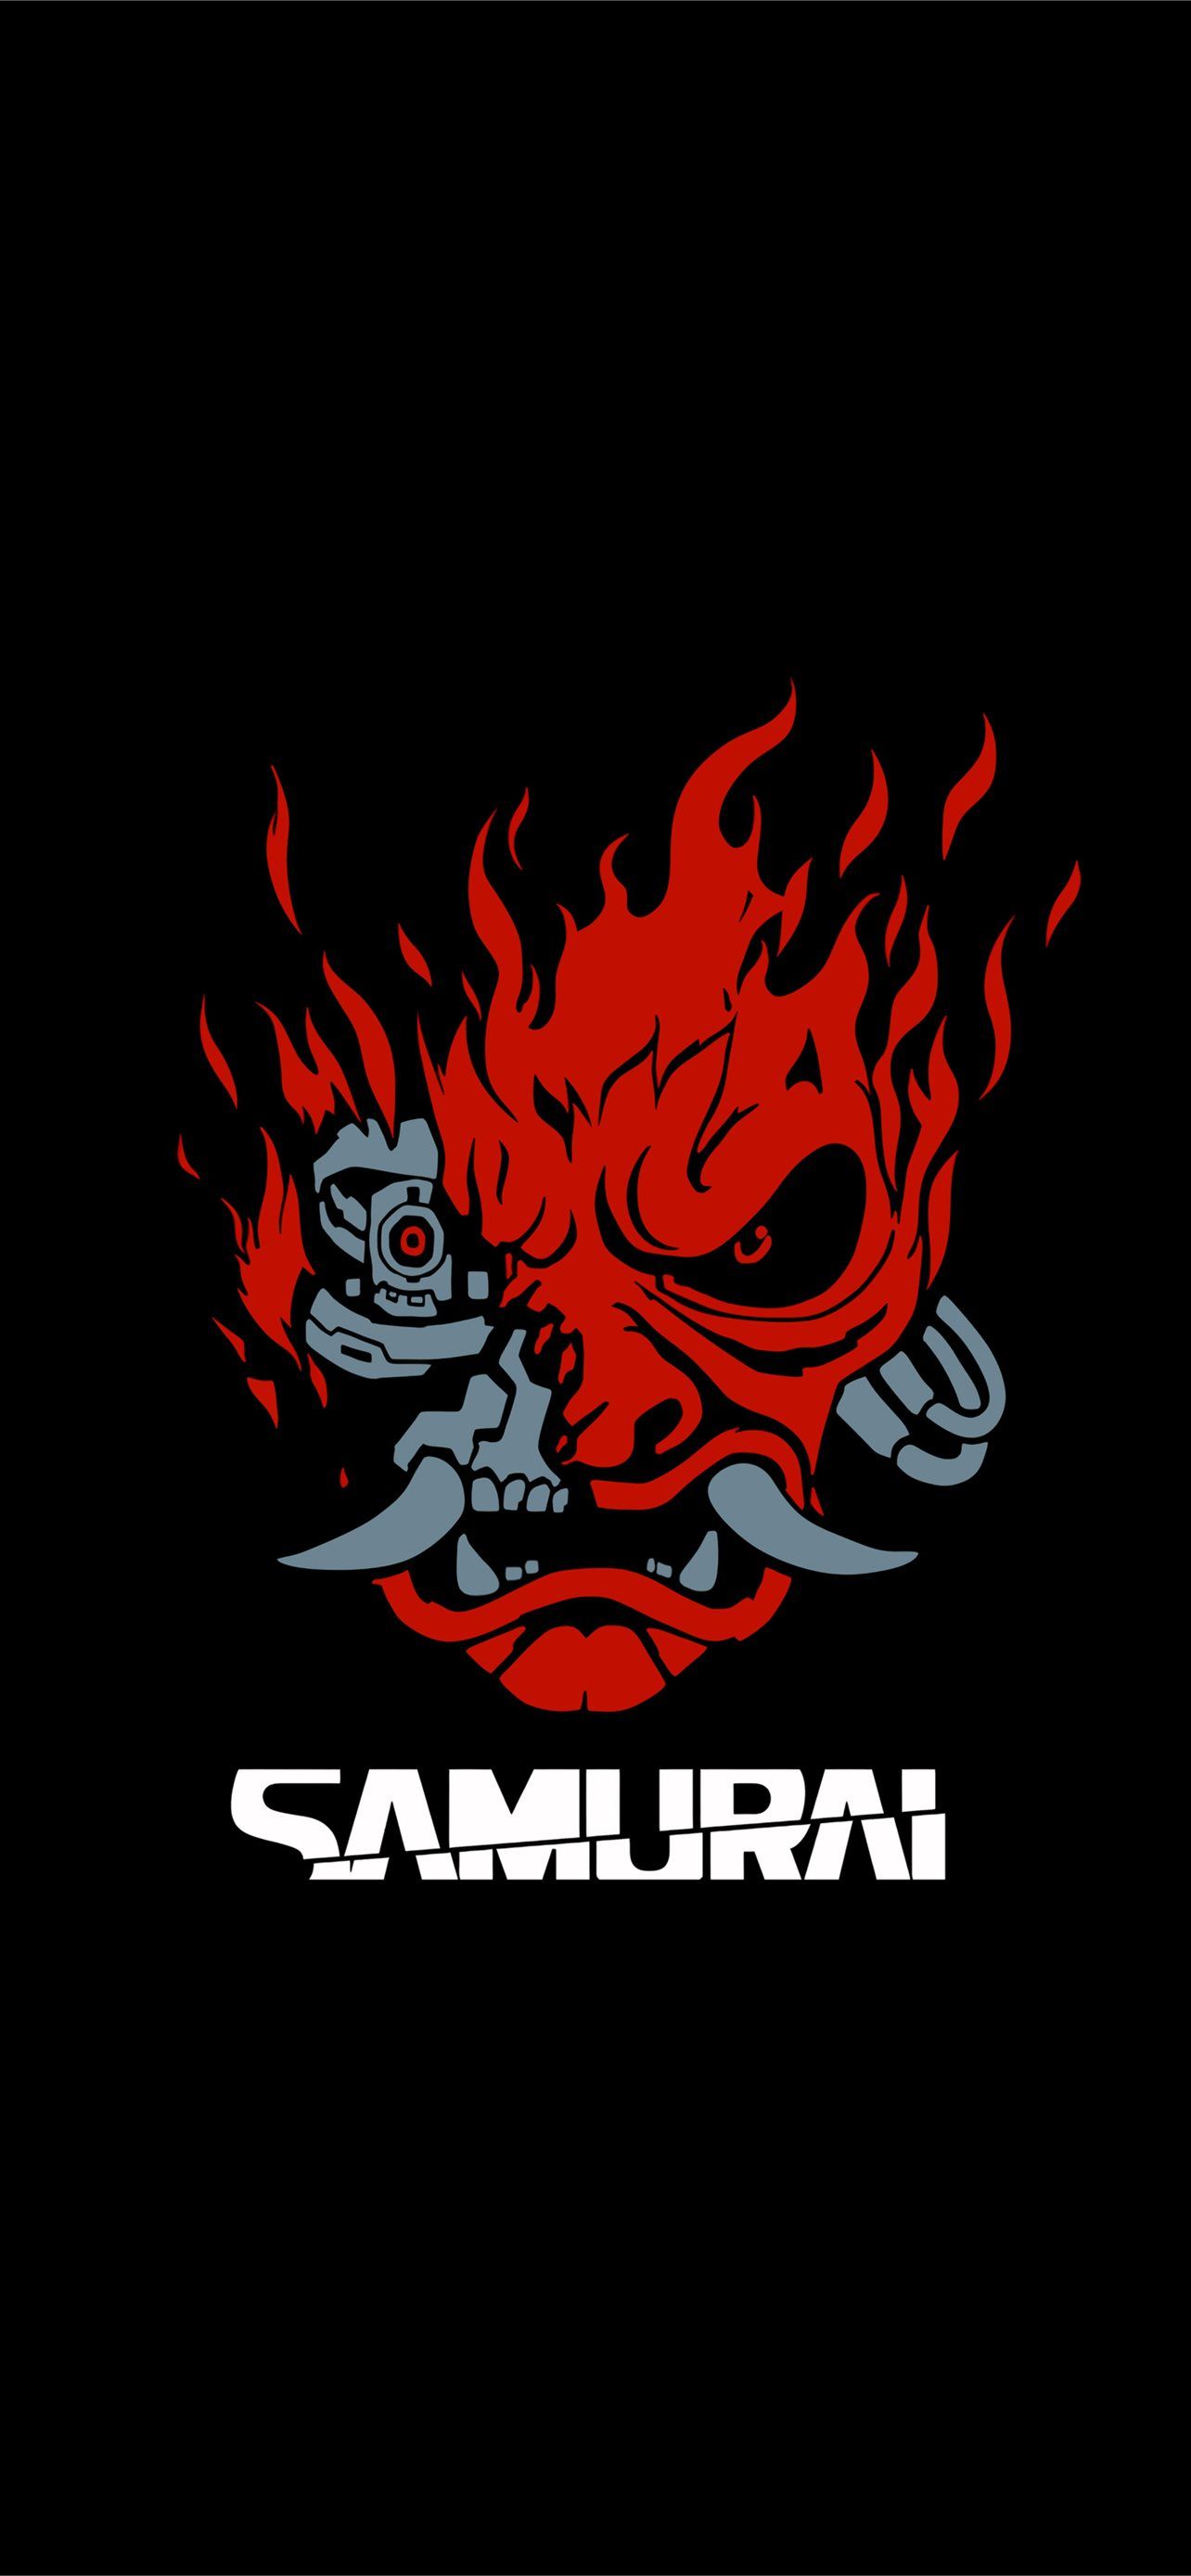 Samurai wallpaper for iPhone and Android. - Punk, samurai